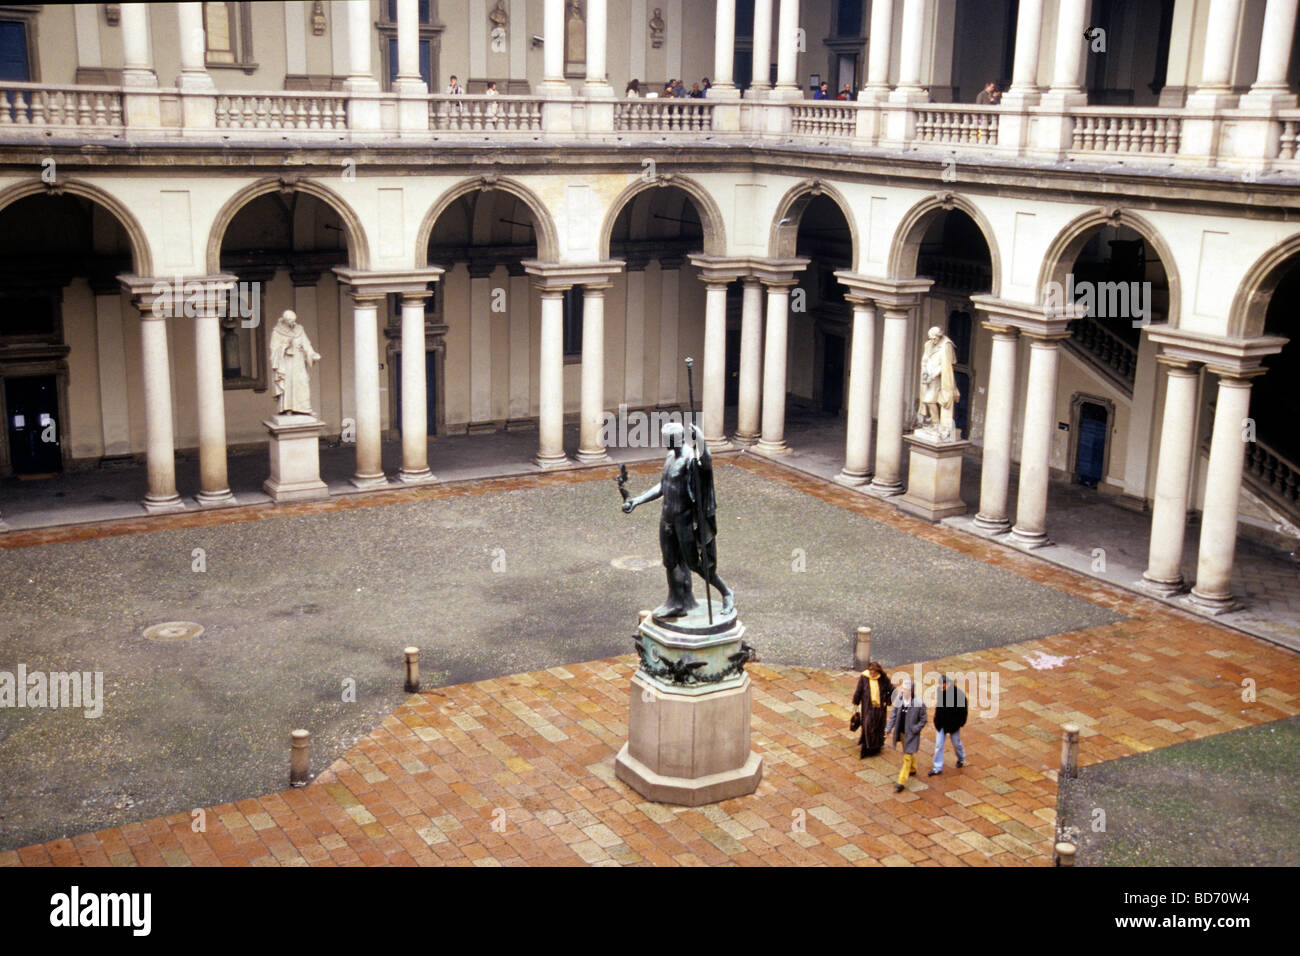 Palazzo di Brera square, Pinoteca di Brera, palace, National Gallery and Museum, courtyard with arcades, columns and arches, Mi Stock Photo